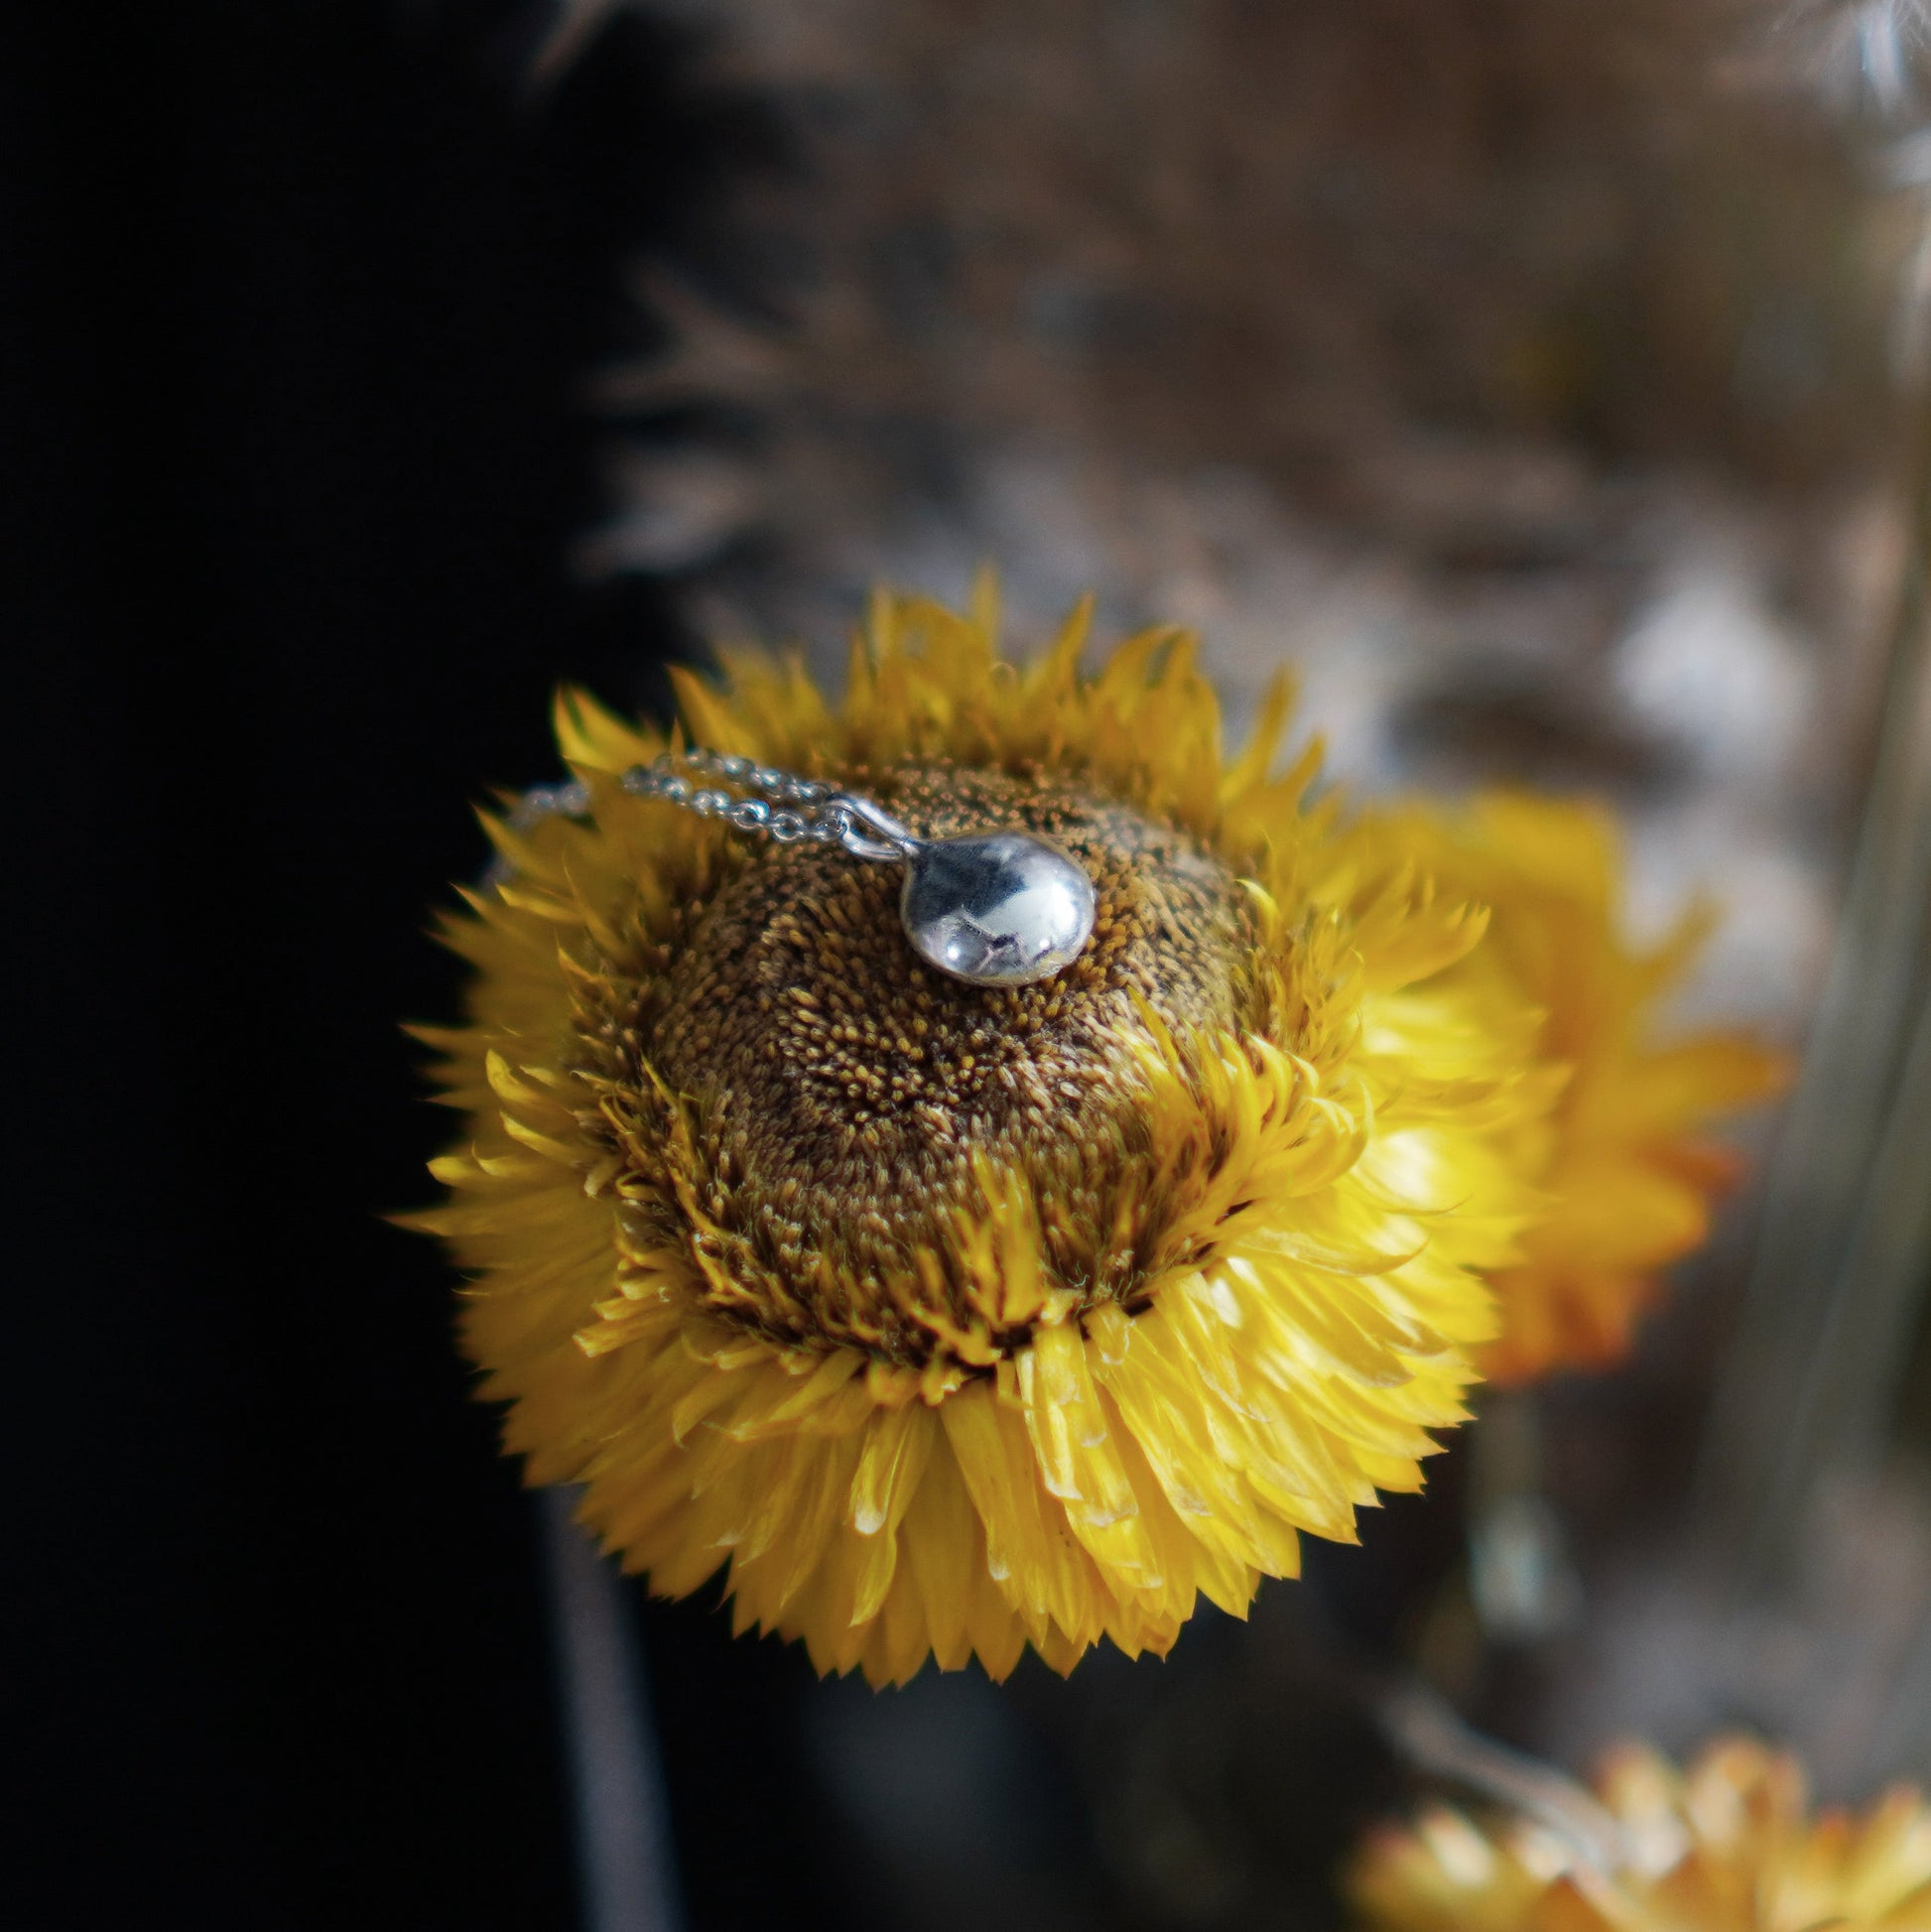 Shepherd's Purse Little Flower Necklace - Silver - Aisling Chou Studio